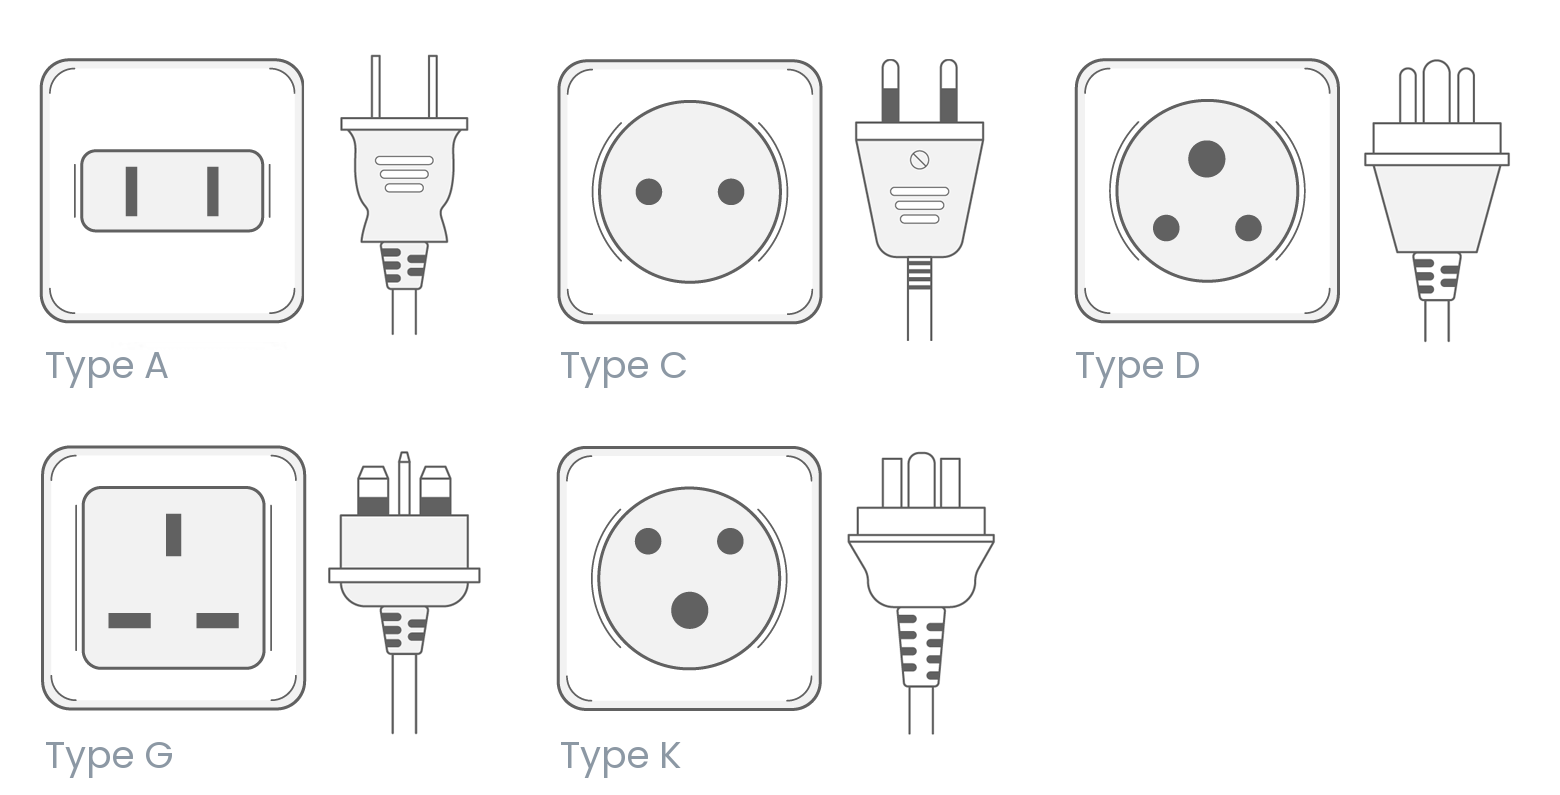 Bangladesh power plug outlet type K